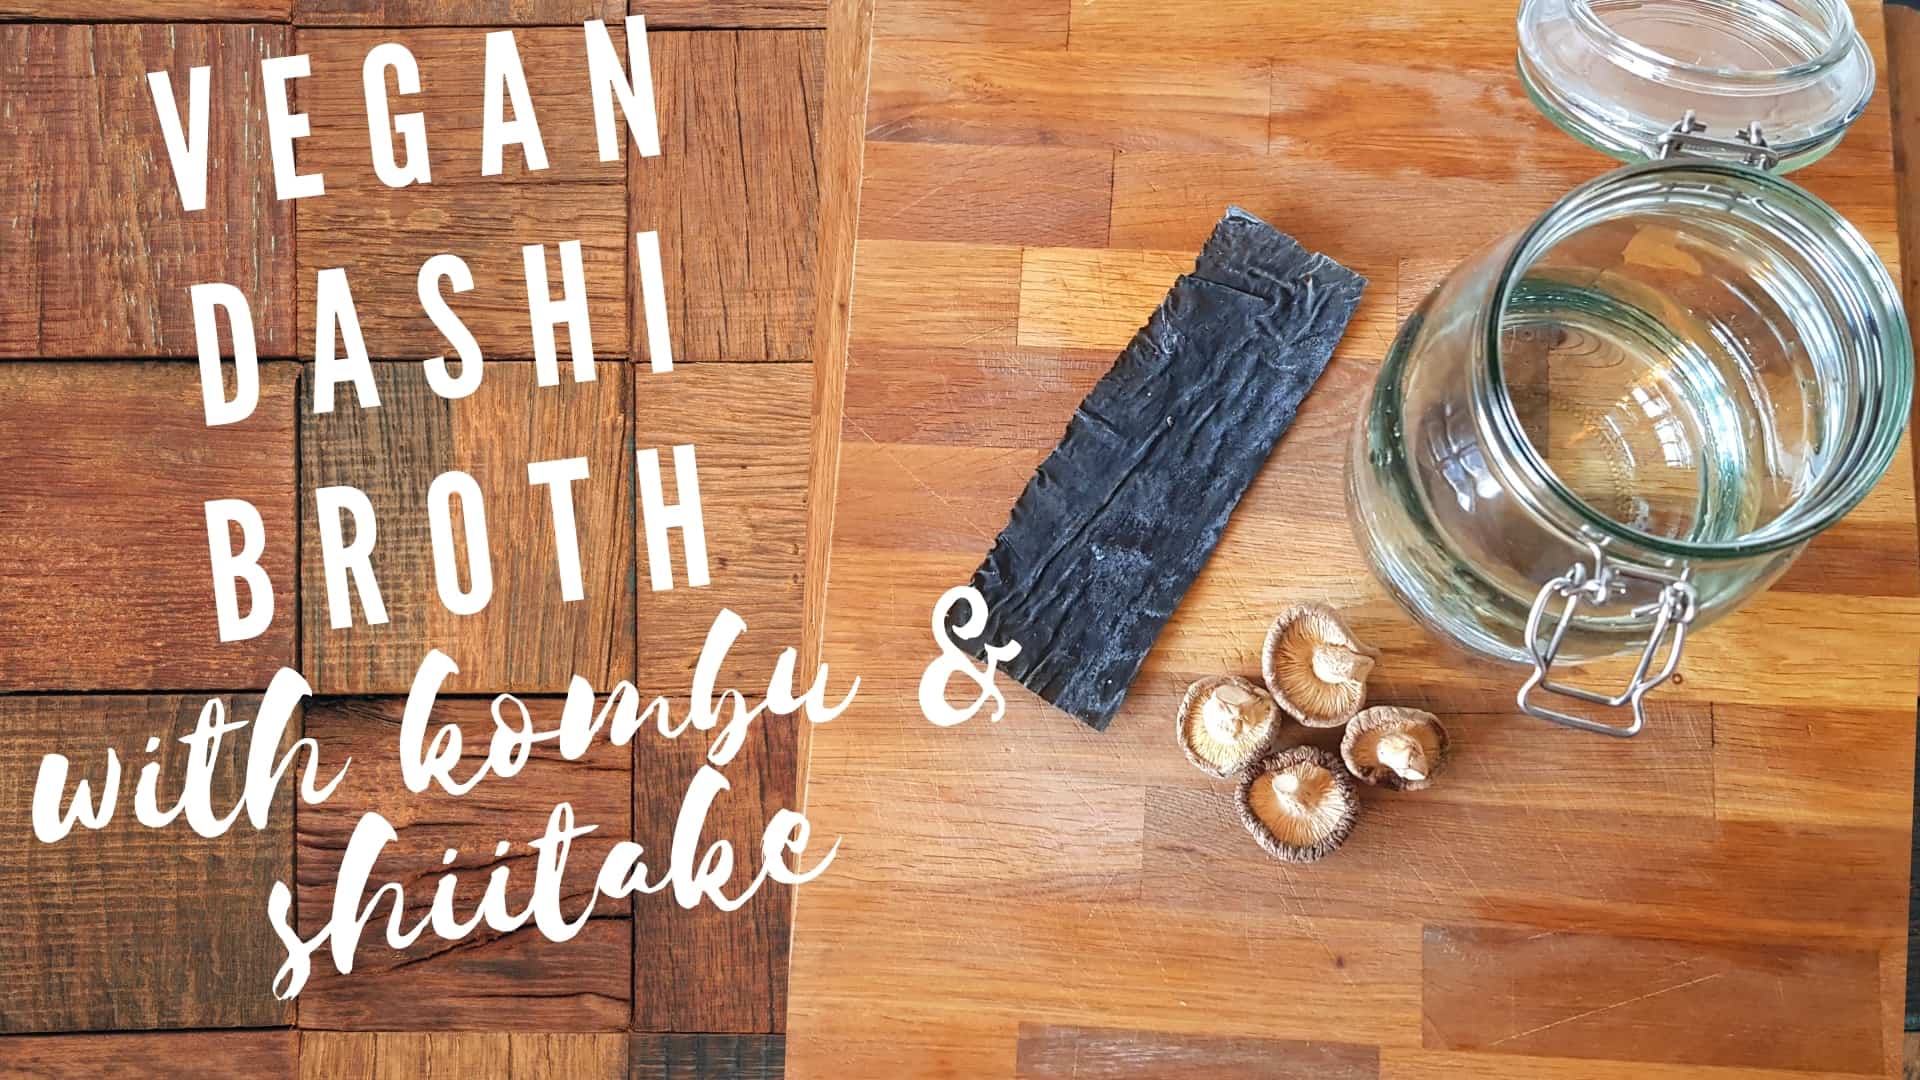 Vegan dashi broth with kombu and shiitake